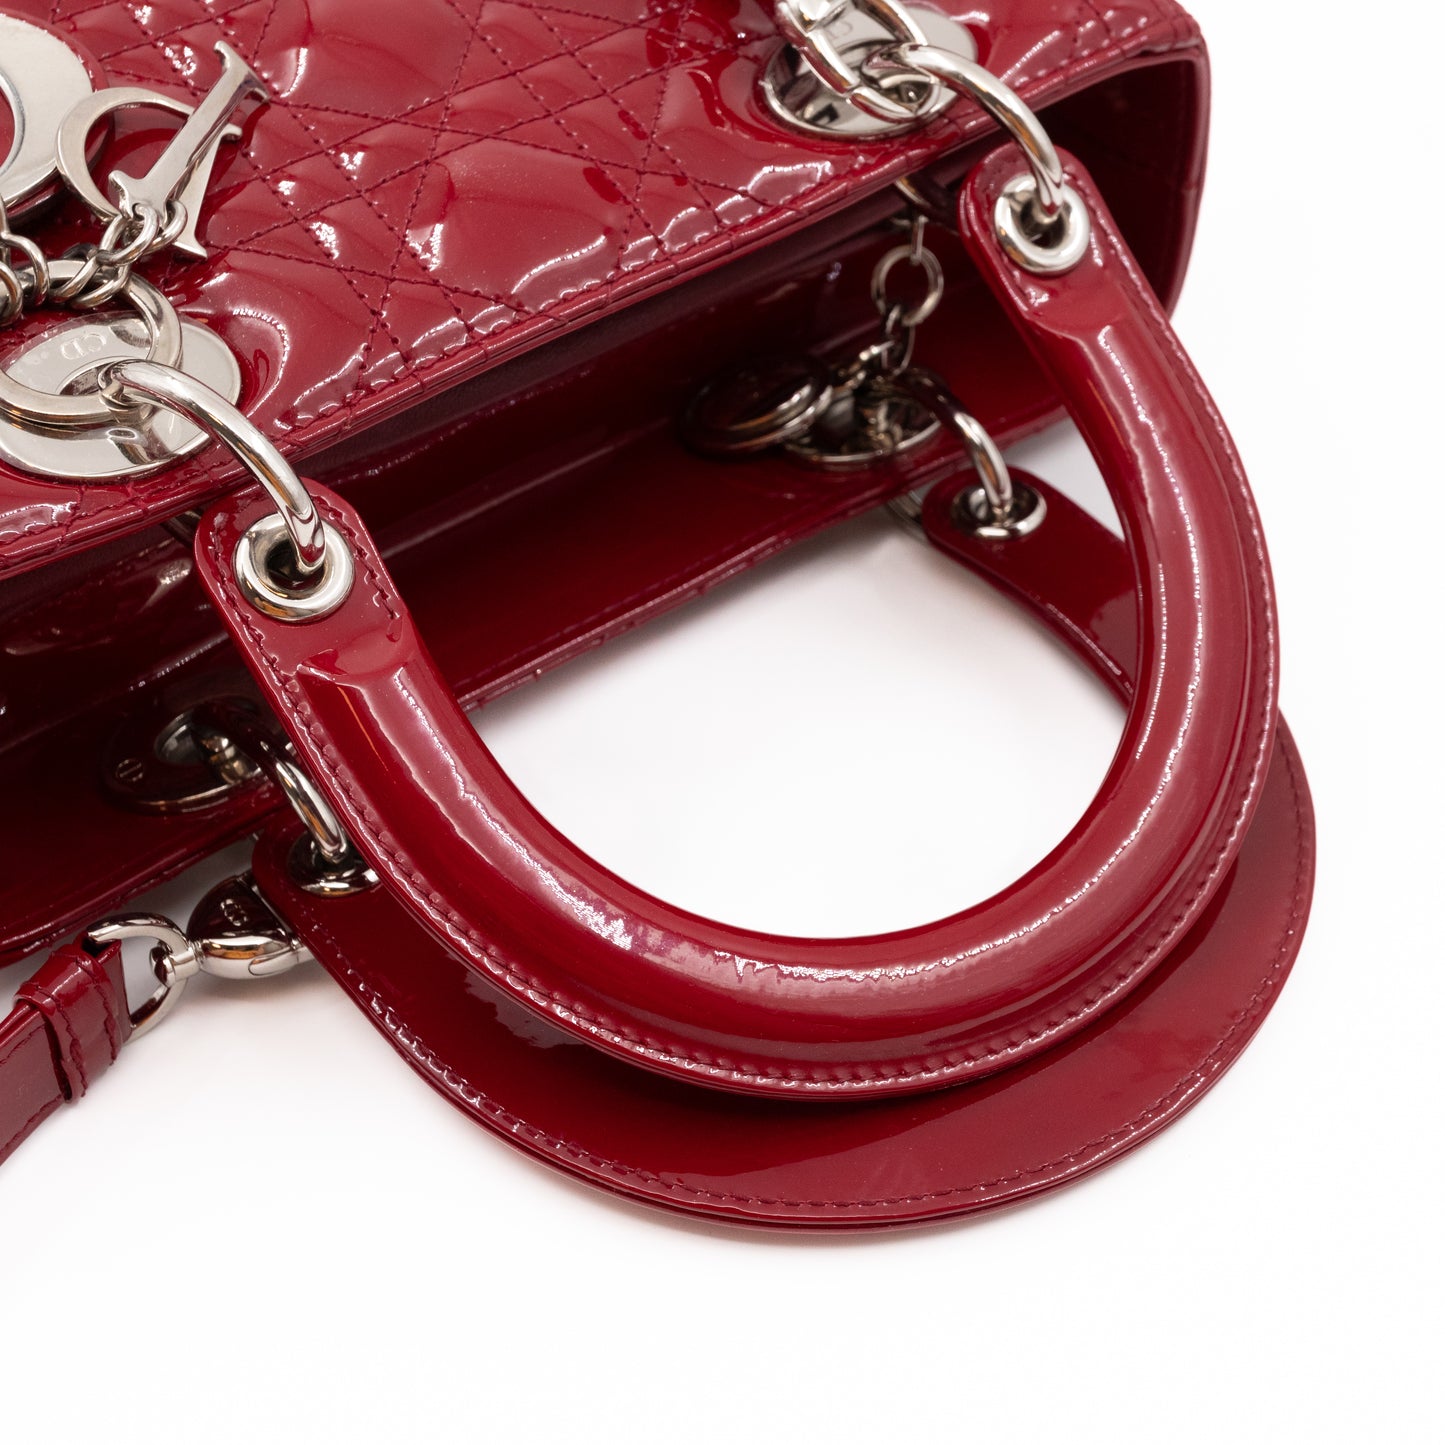 Lady Dior Medium Red Patent Leather